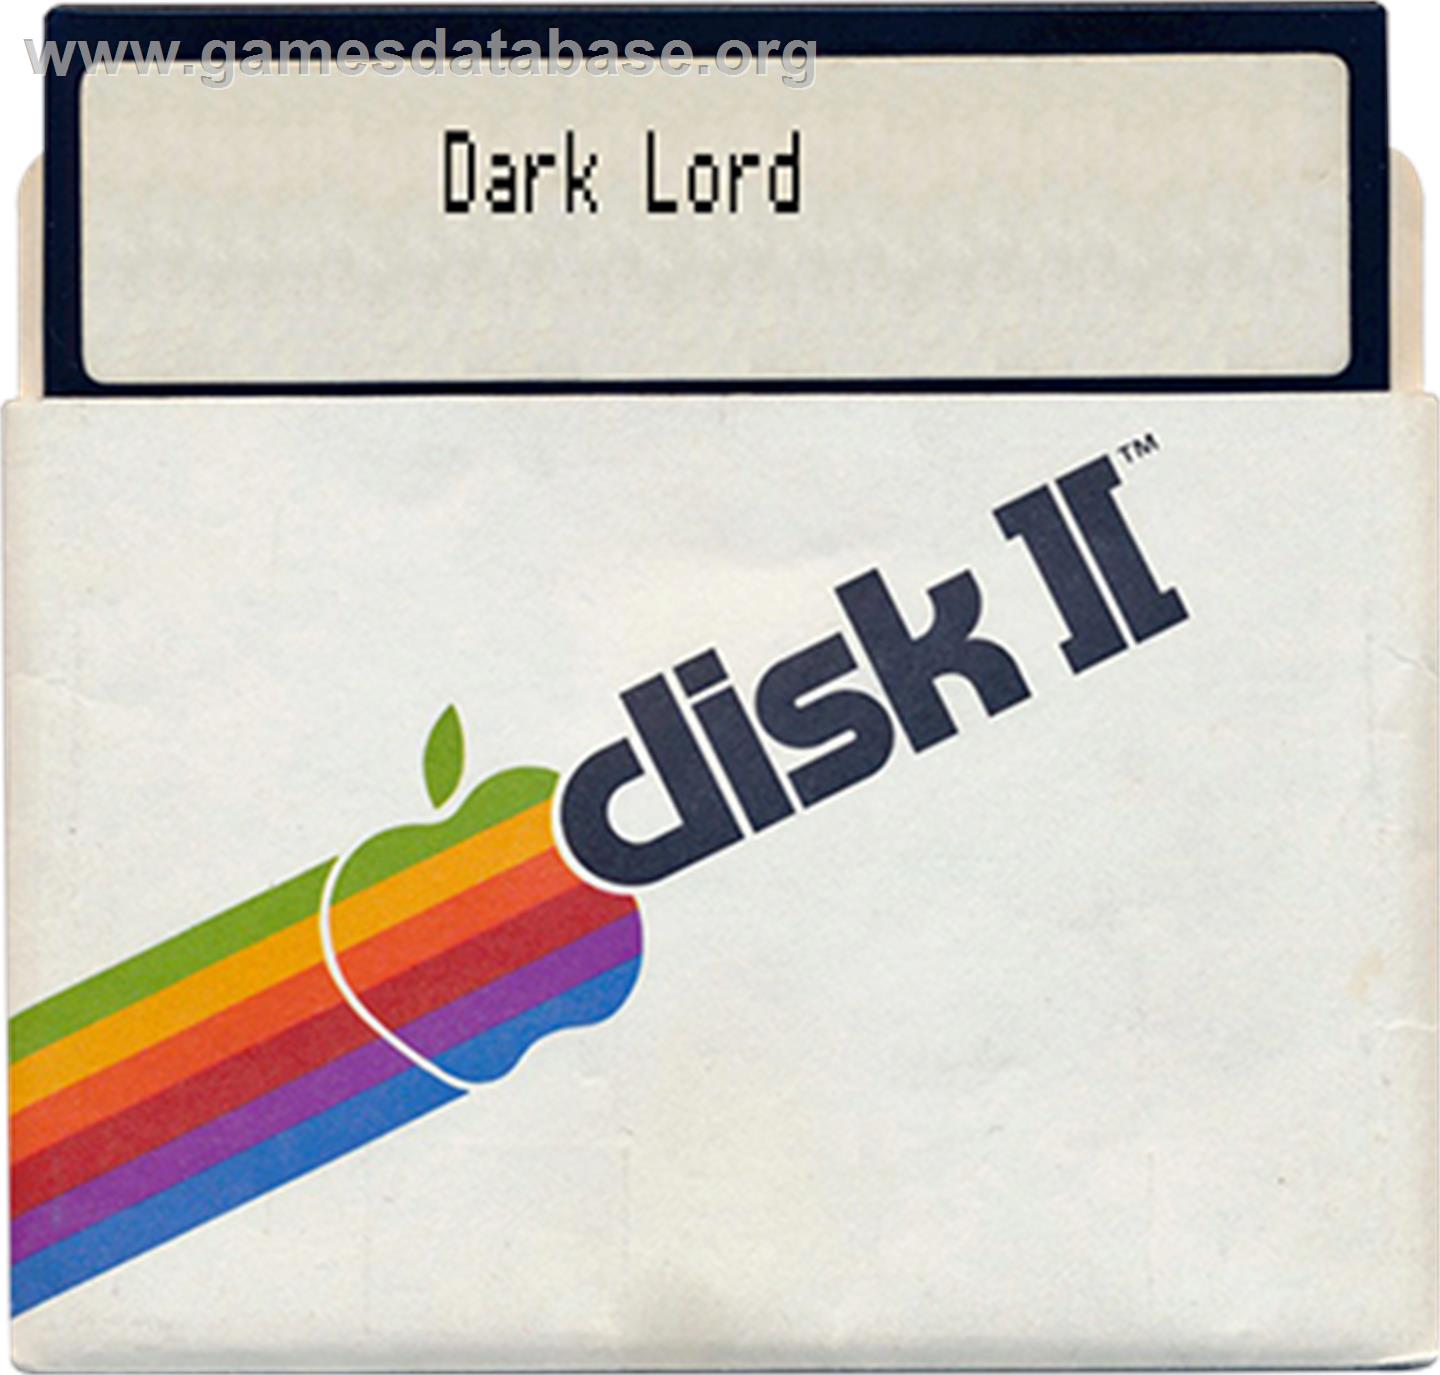 Learn to Add - Apple II - Artwork - Disc